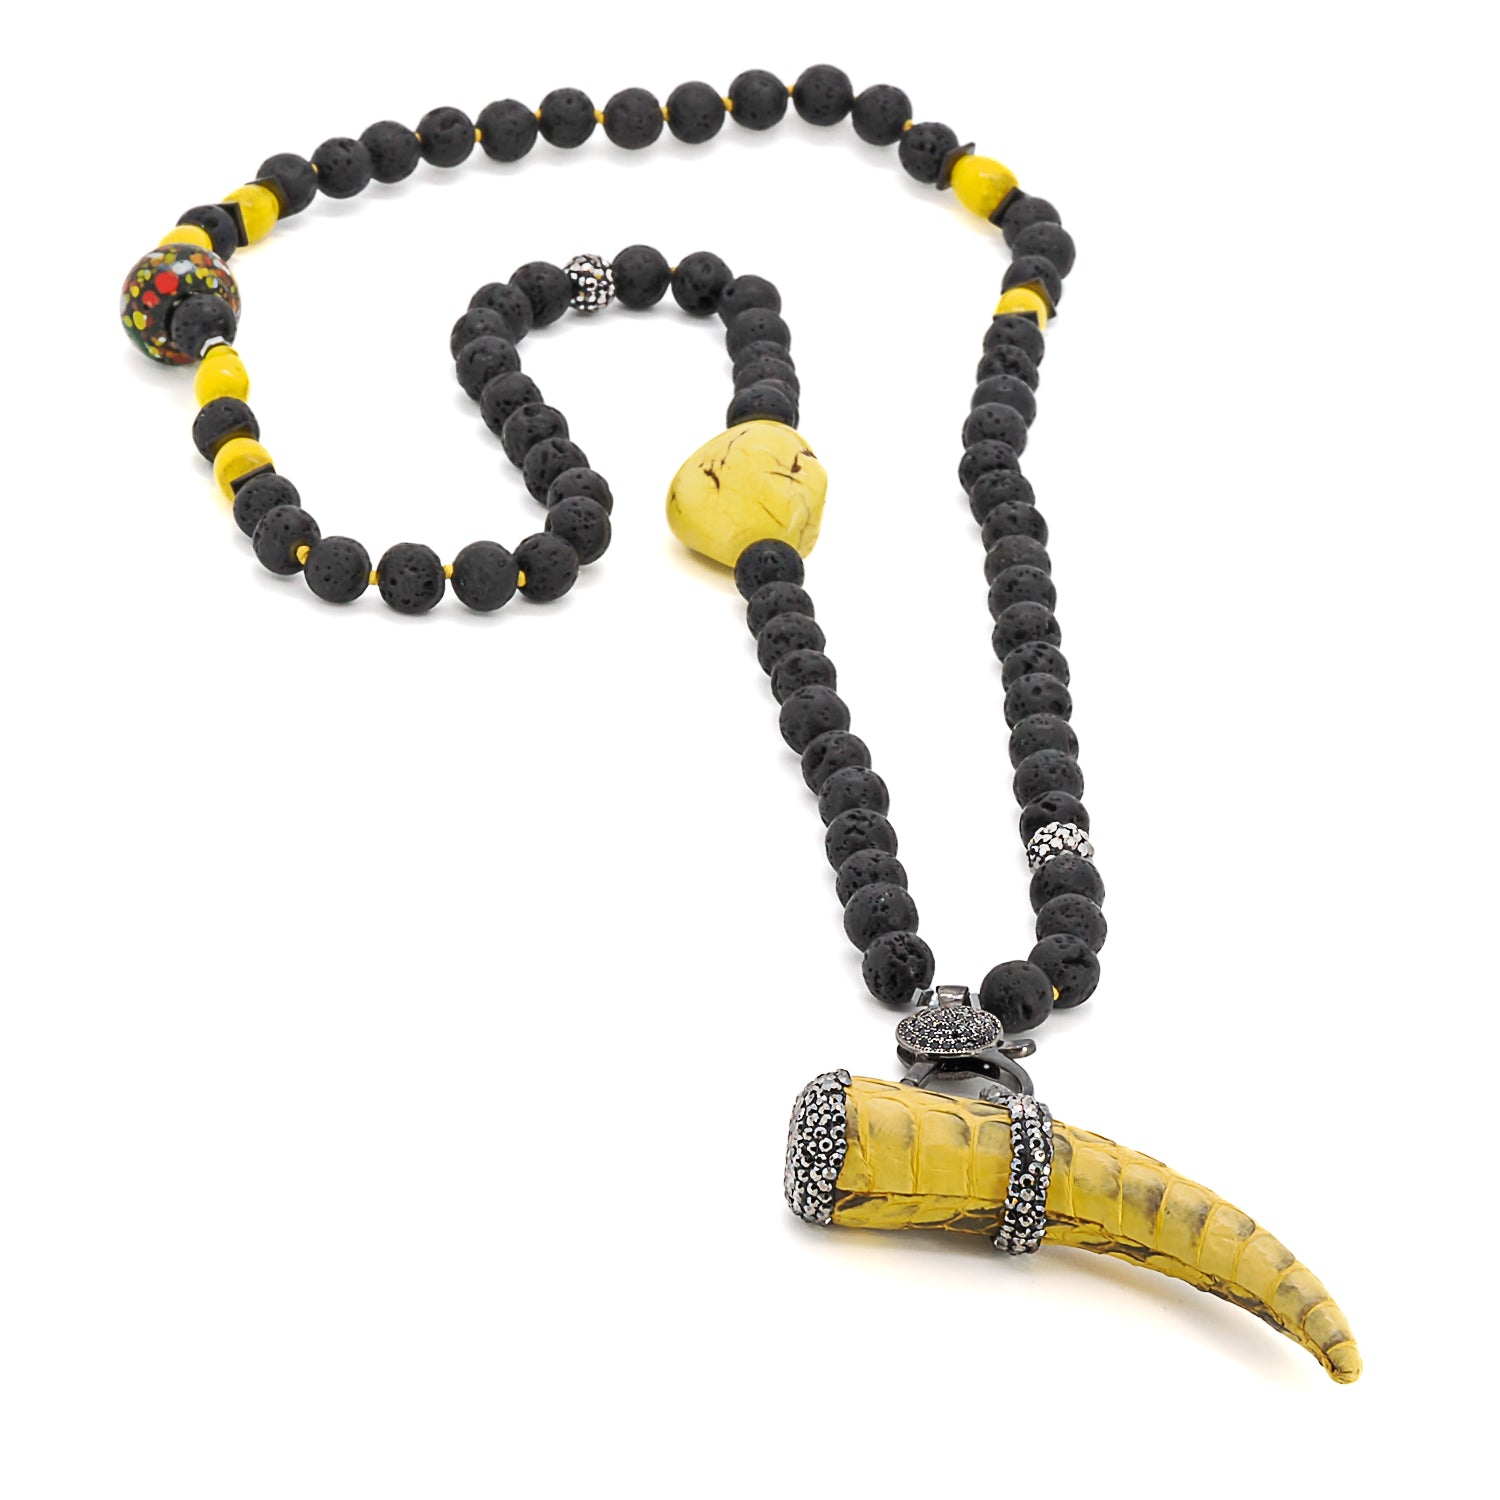 Close-up of the unique yellow and zircon Cornicello pendant, beautifully contrasting against the black lava rock stones in the Spirit Cornicello Unique Necklace.